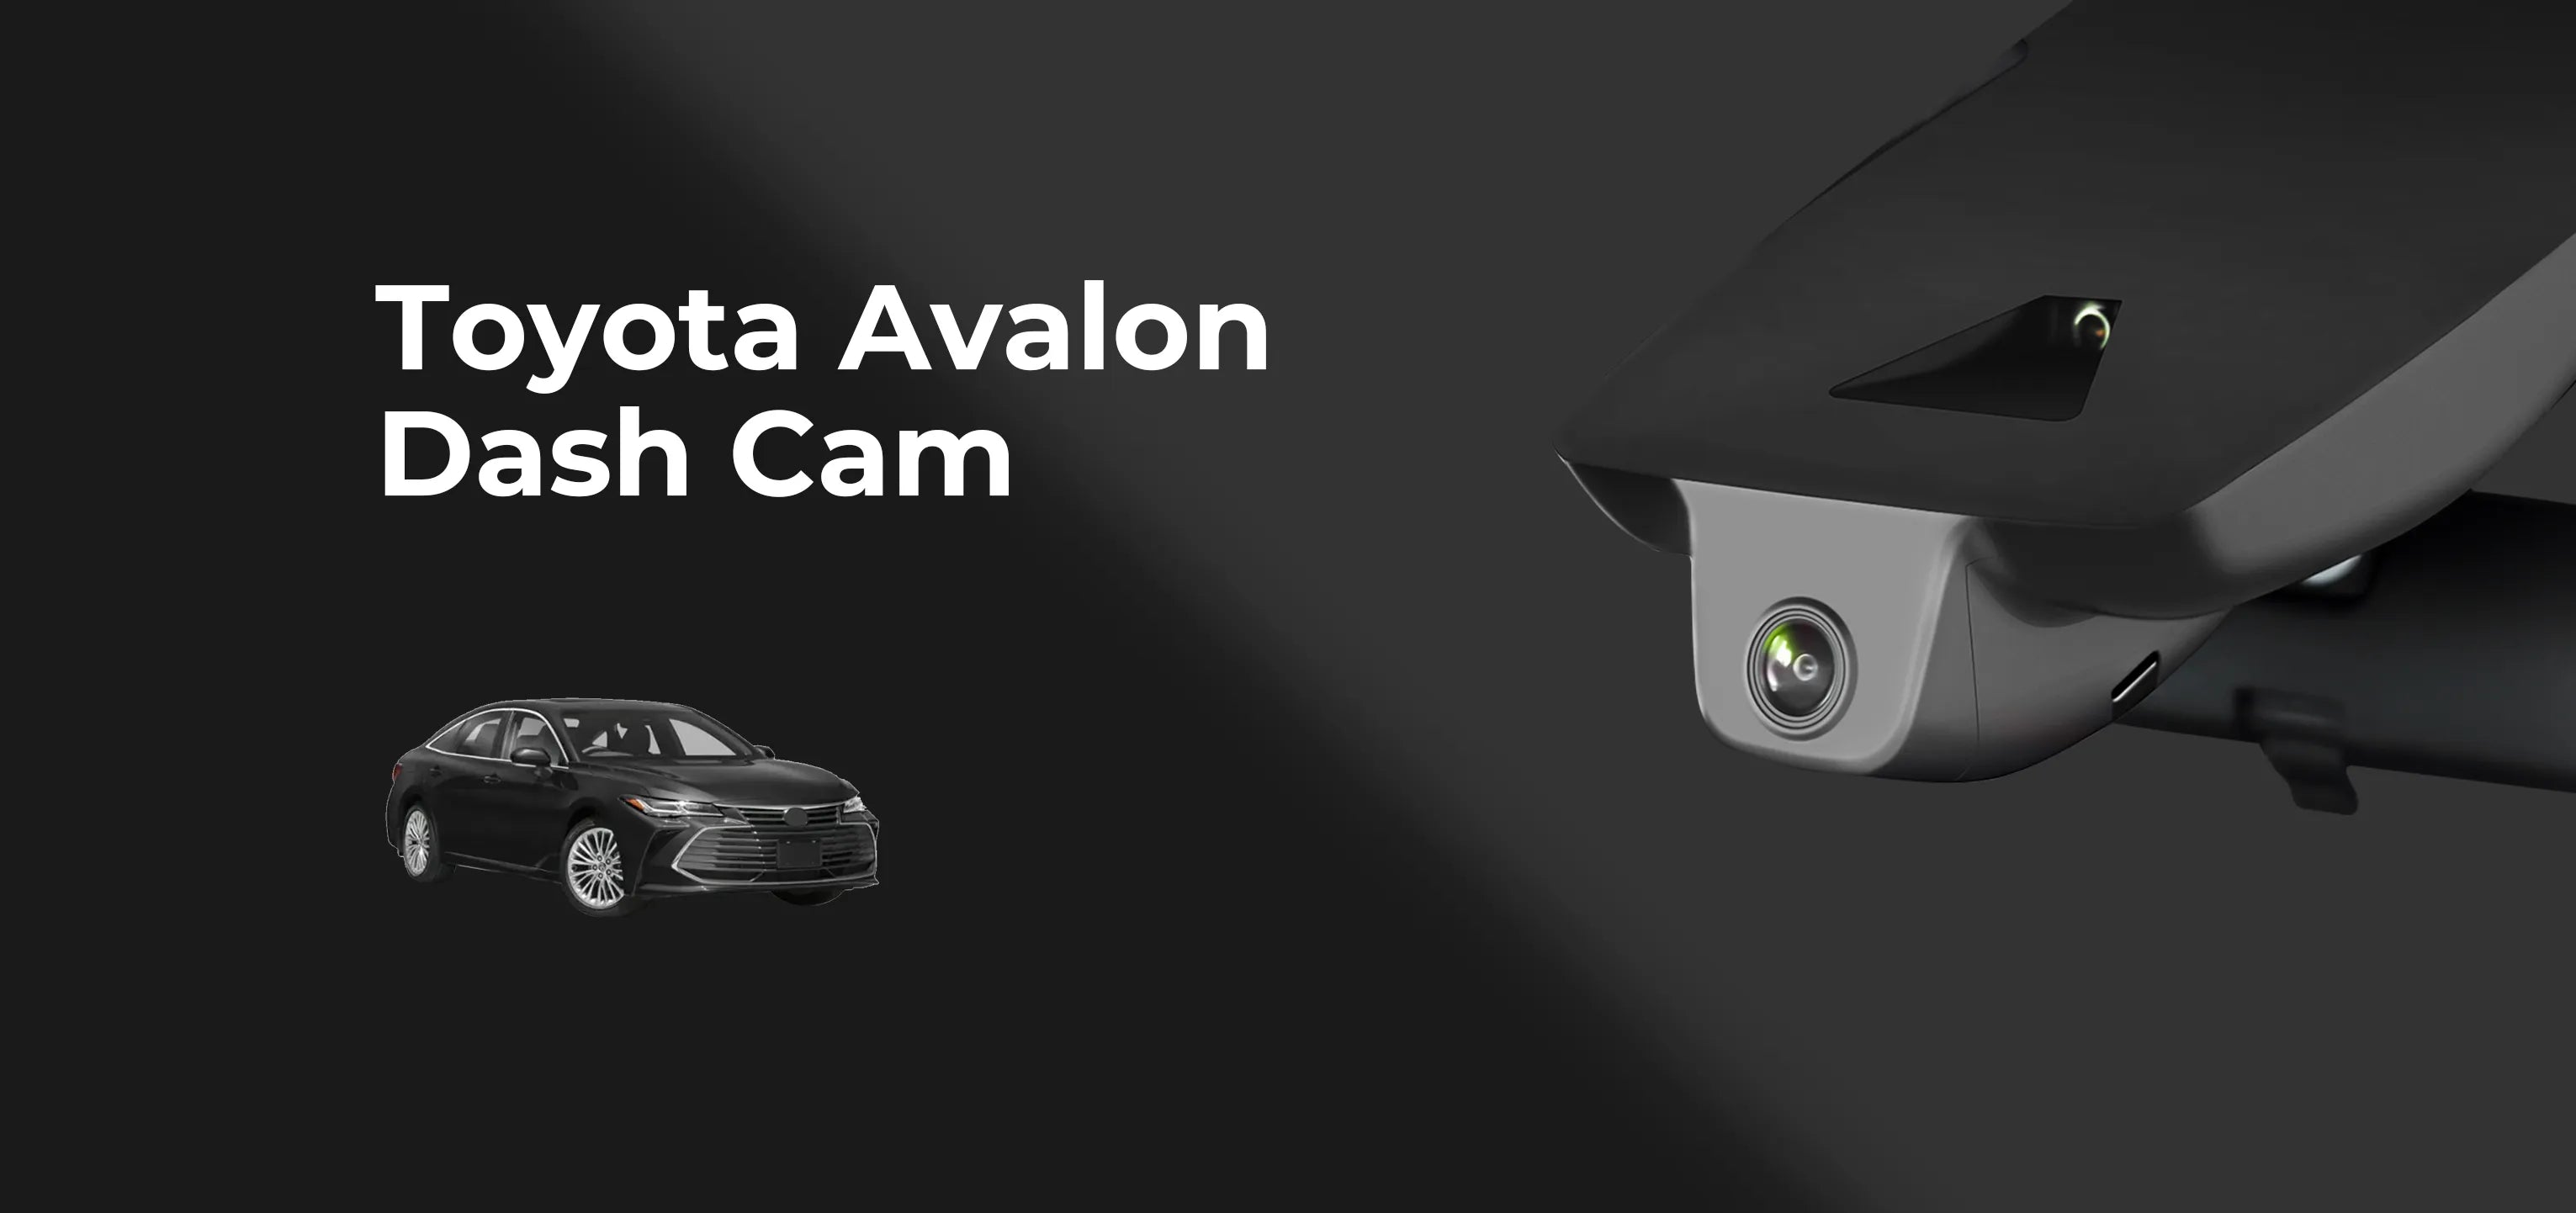 Toyota Avalon dash camera 